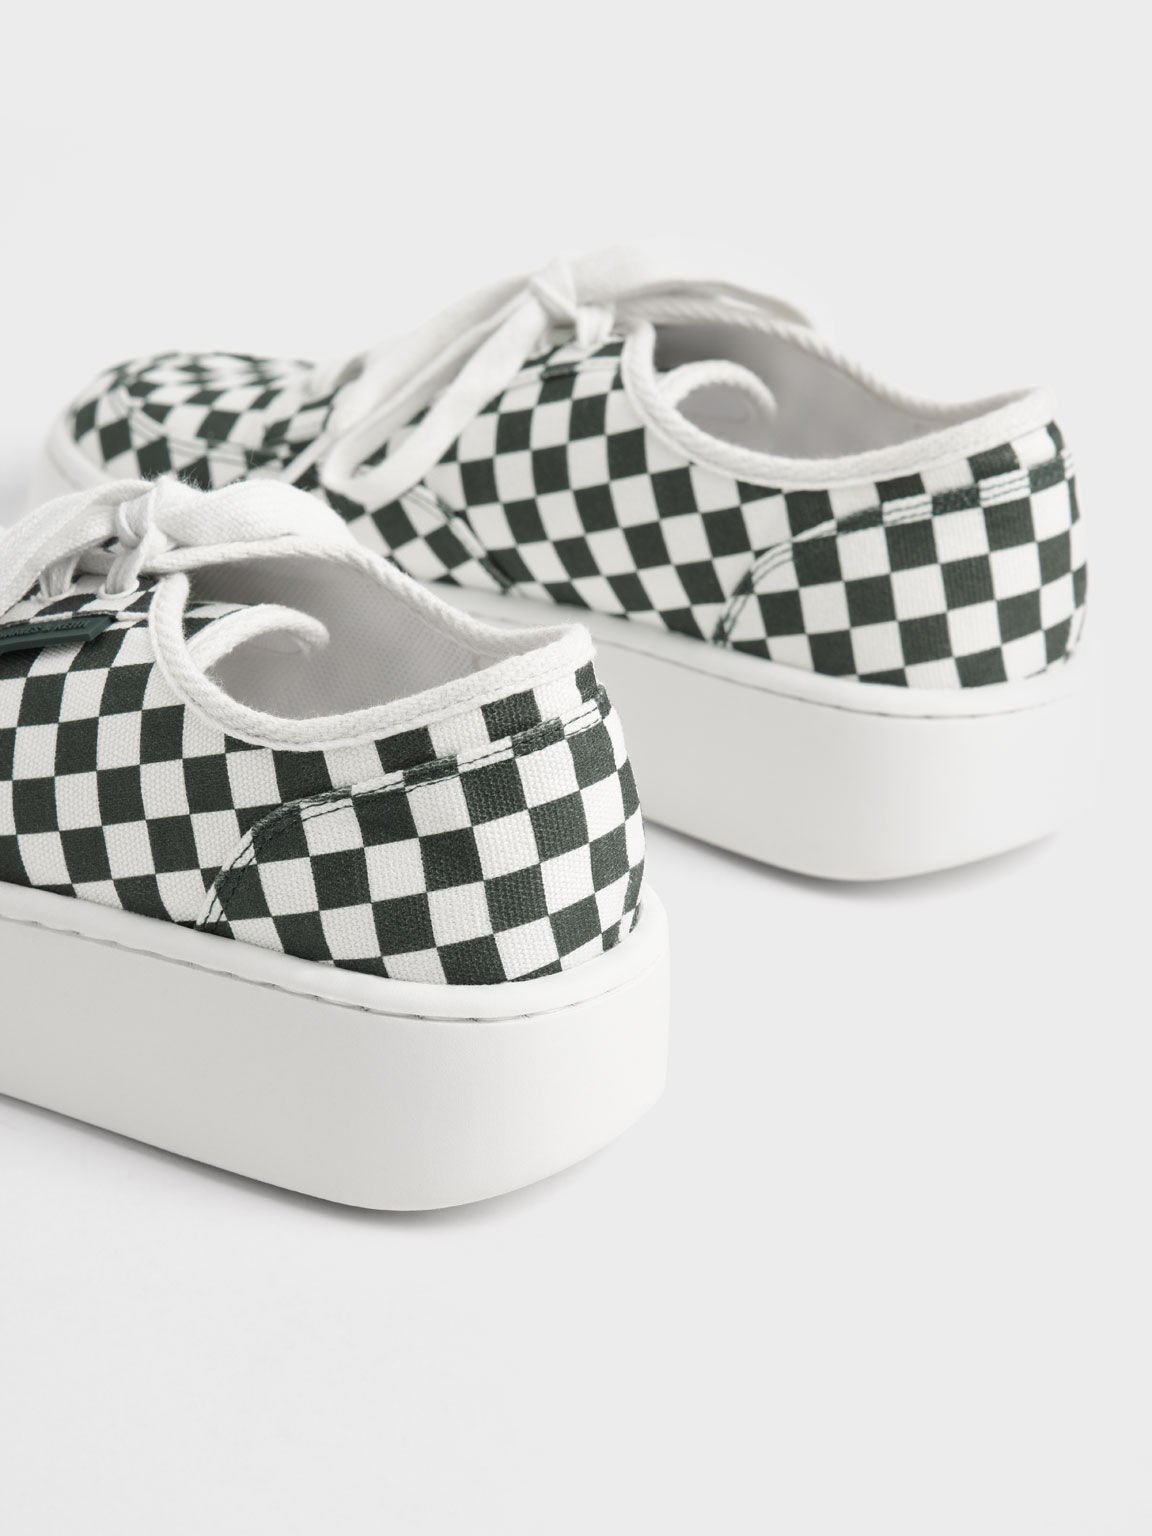 Skye Checkered Canvas & Cotton Sneakers, Dark Green, hi-res